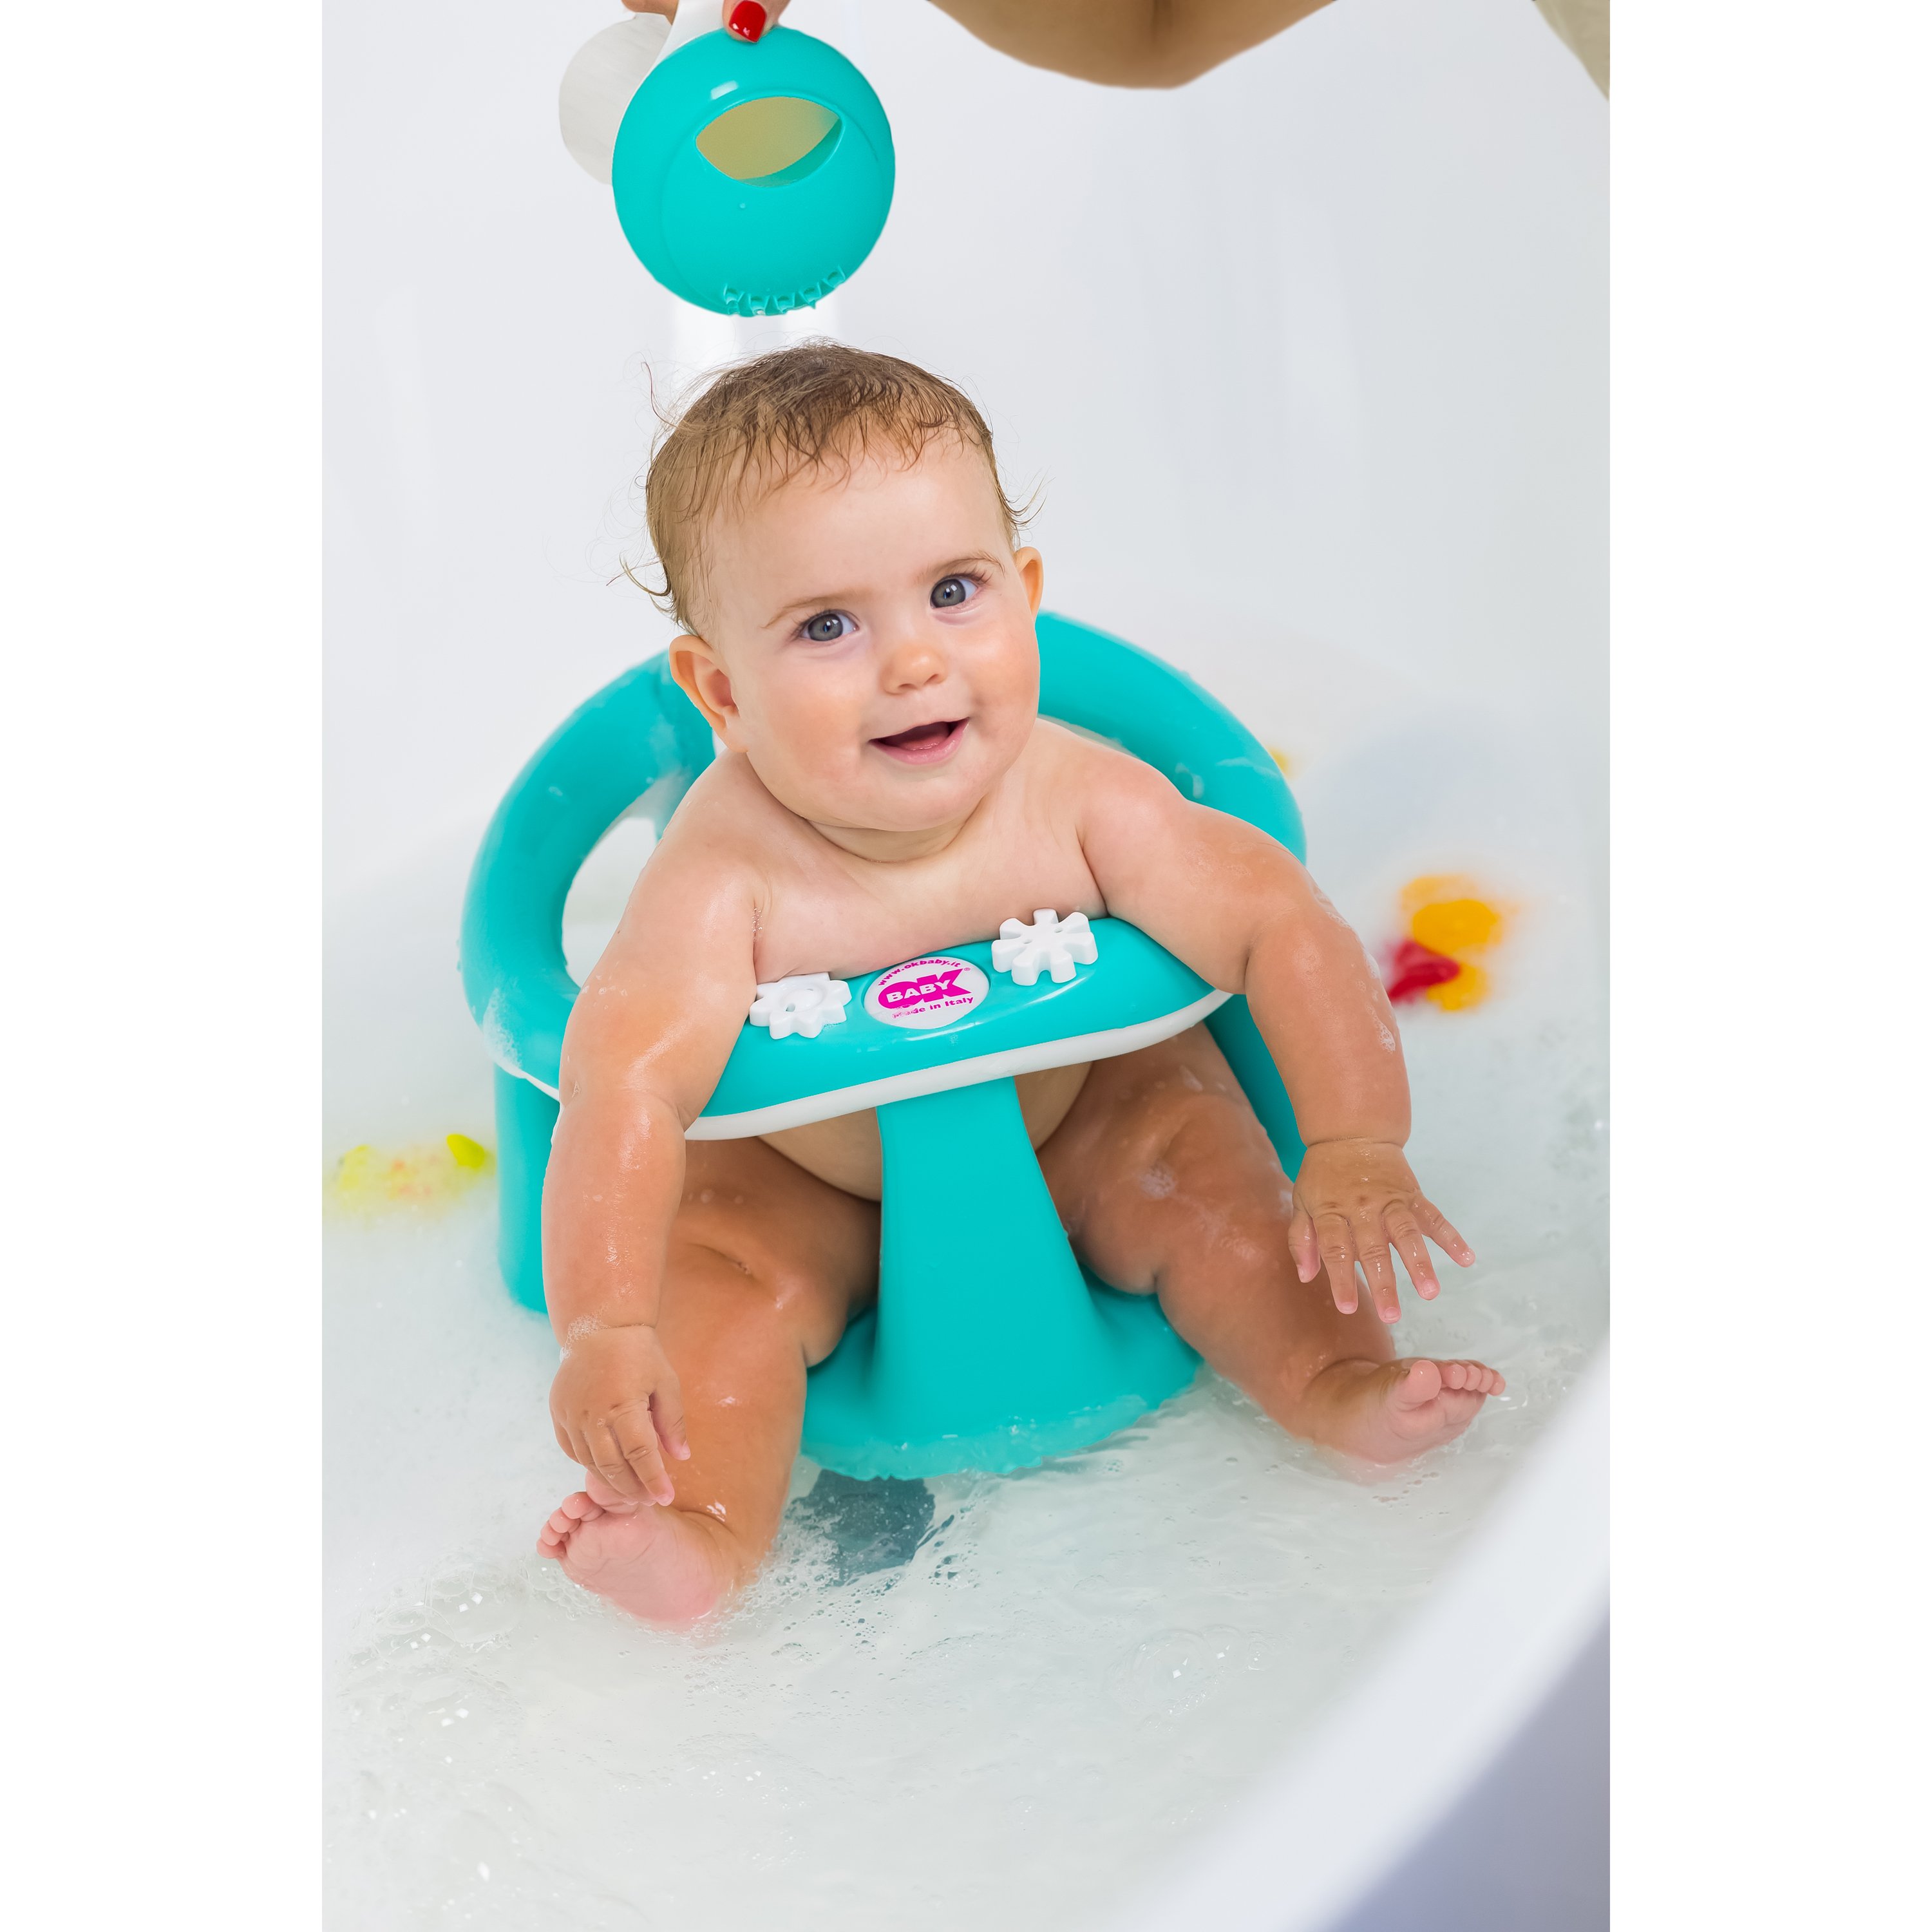 Flipper Evolution siège de bain Vert Pastel de OK Baby, Fauteuils de bain :  Aubert